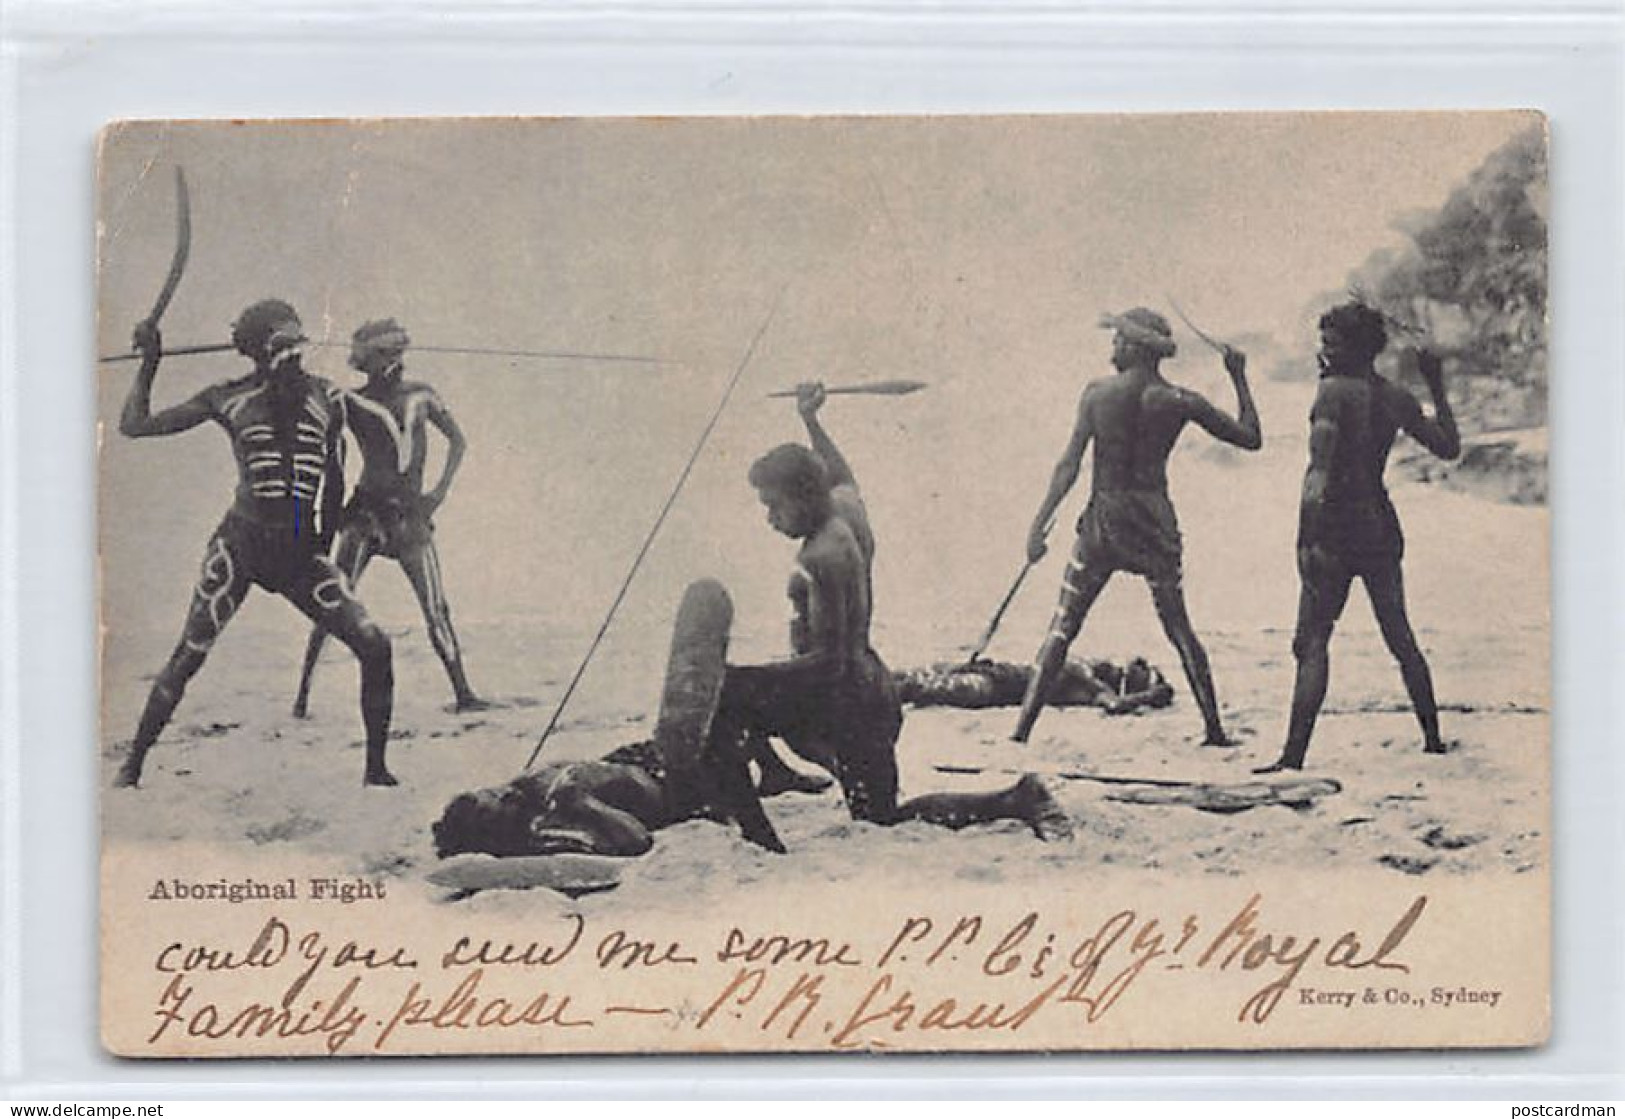 Australia - Aboriginal Fight - Publ. Kerry & Co.  - Aborigenes